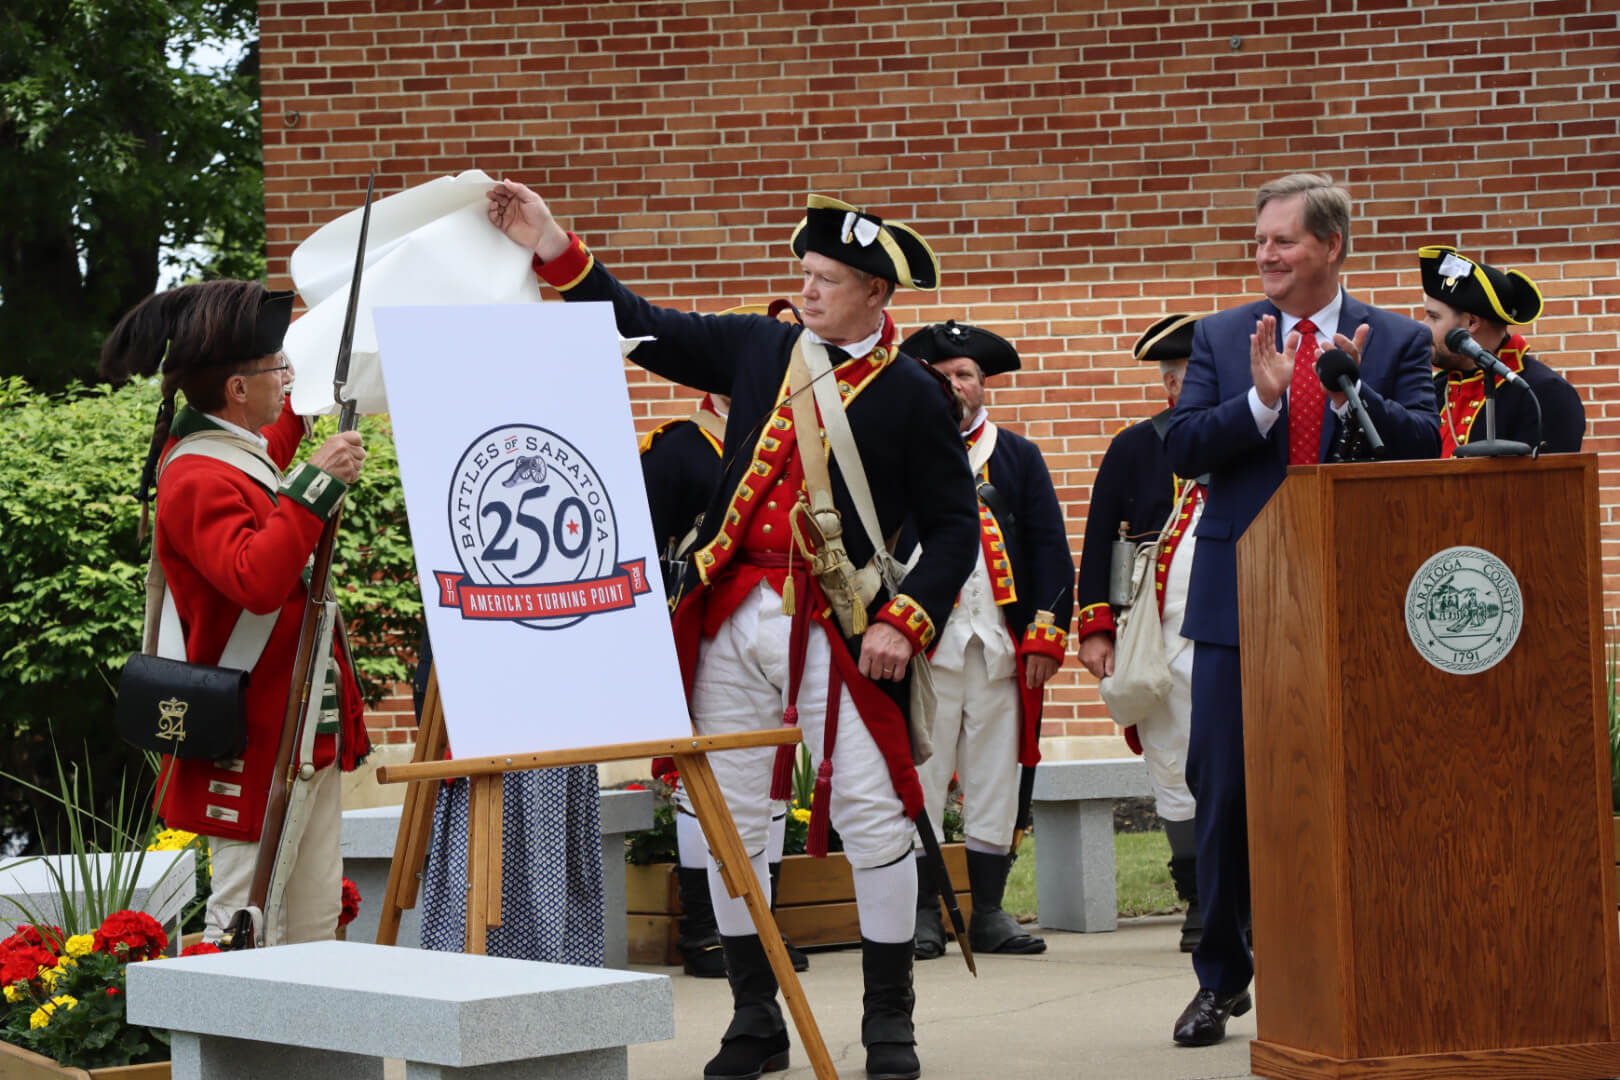 Revolutionary War reenactors unveiling the Battles of Saratoga 250 brand at a press conference